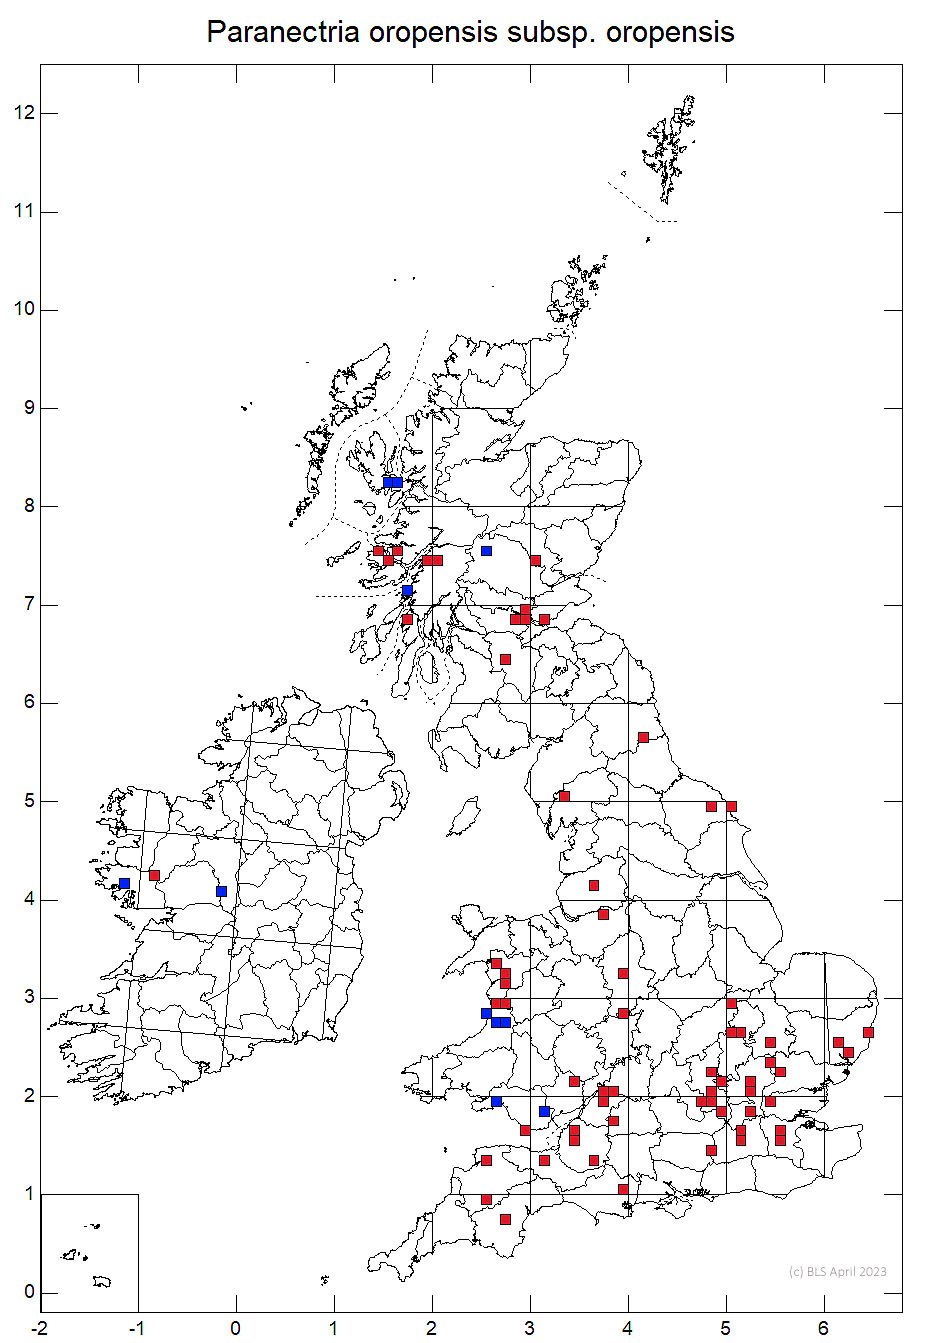 Paranectria oropensis subsp. oropensis 10km sq distribution map